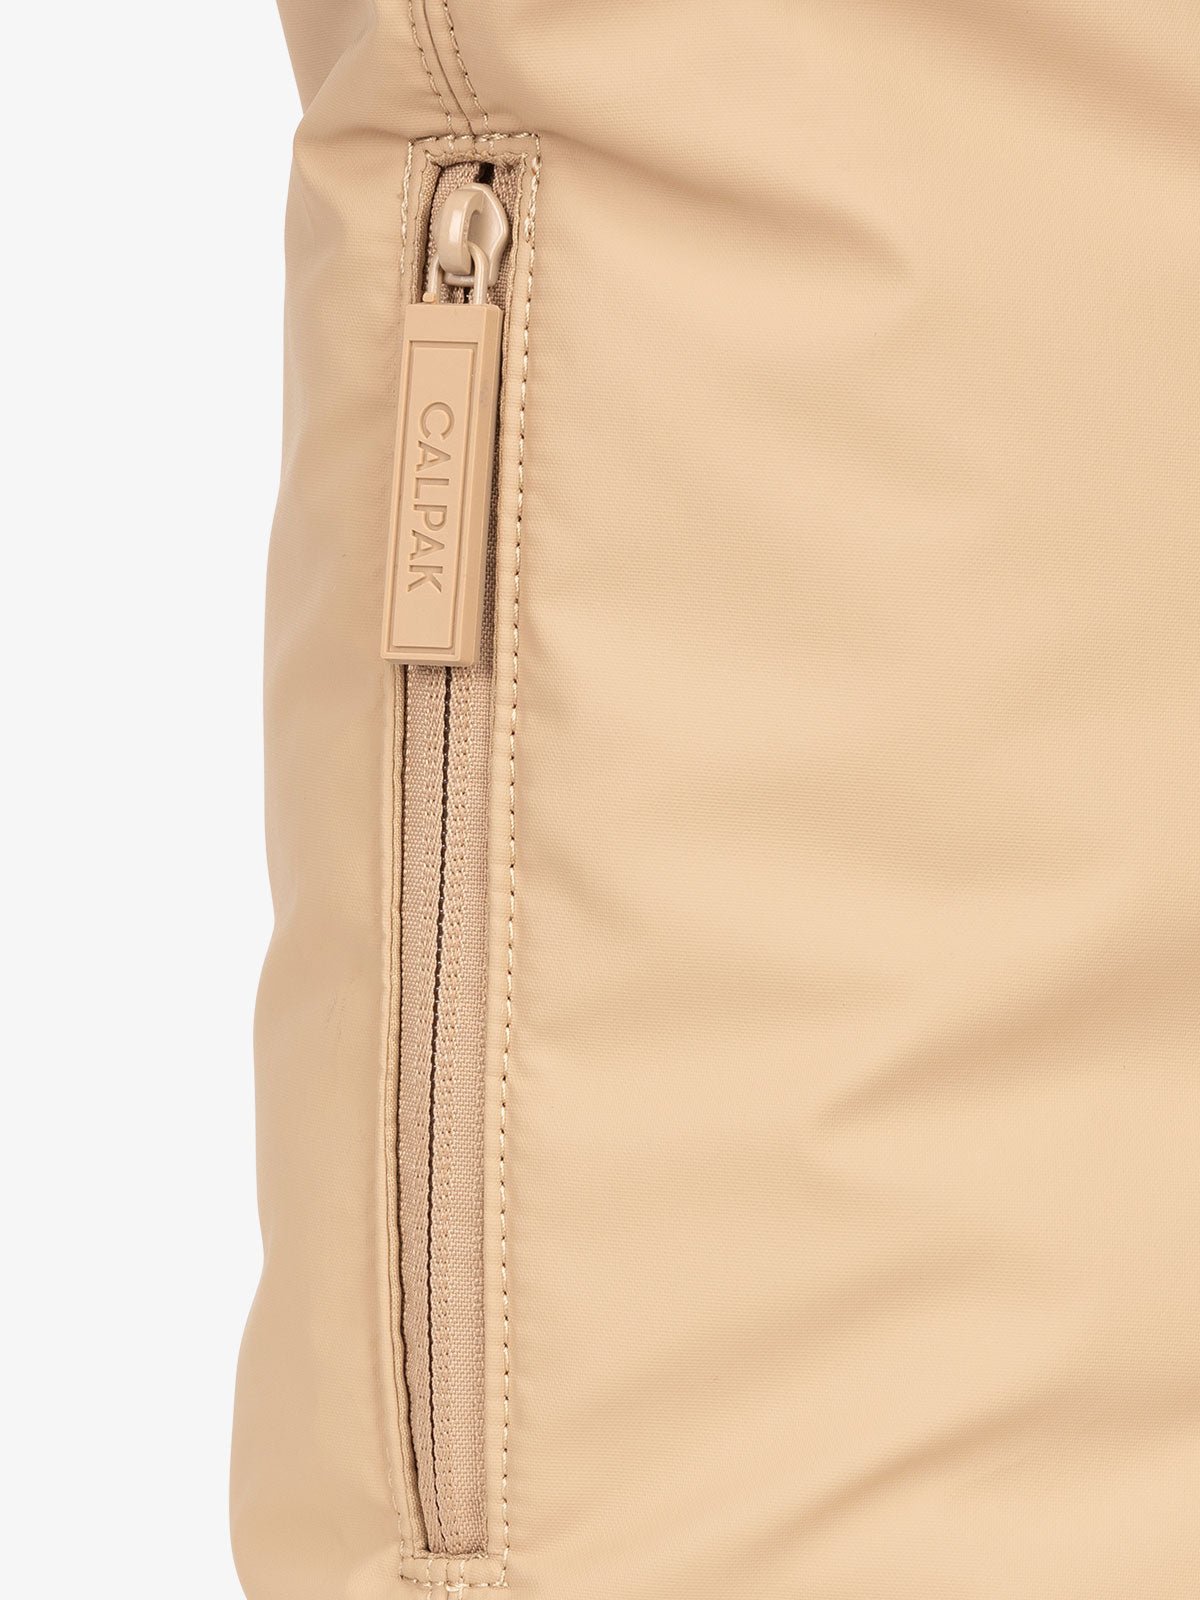 CALPAK Luka expandable laptop bag with hidden zippered pockets in latte brown